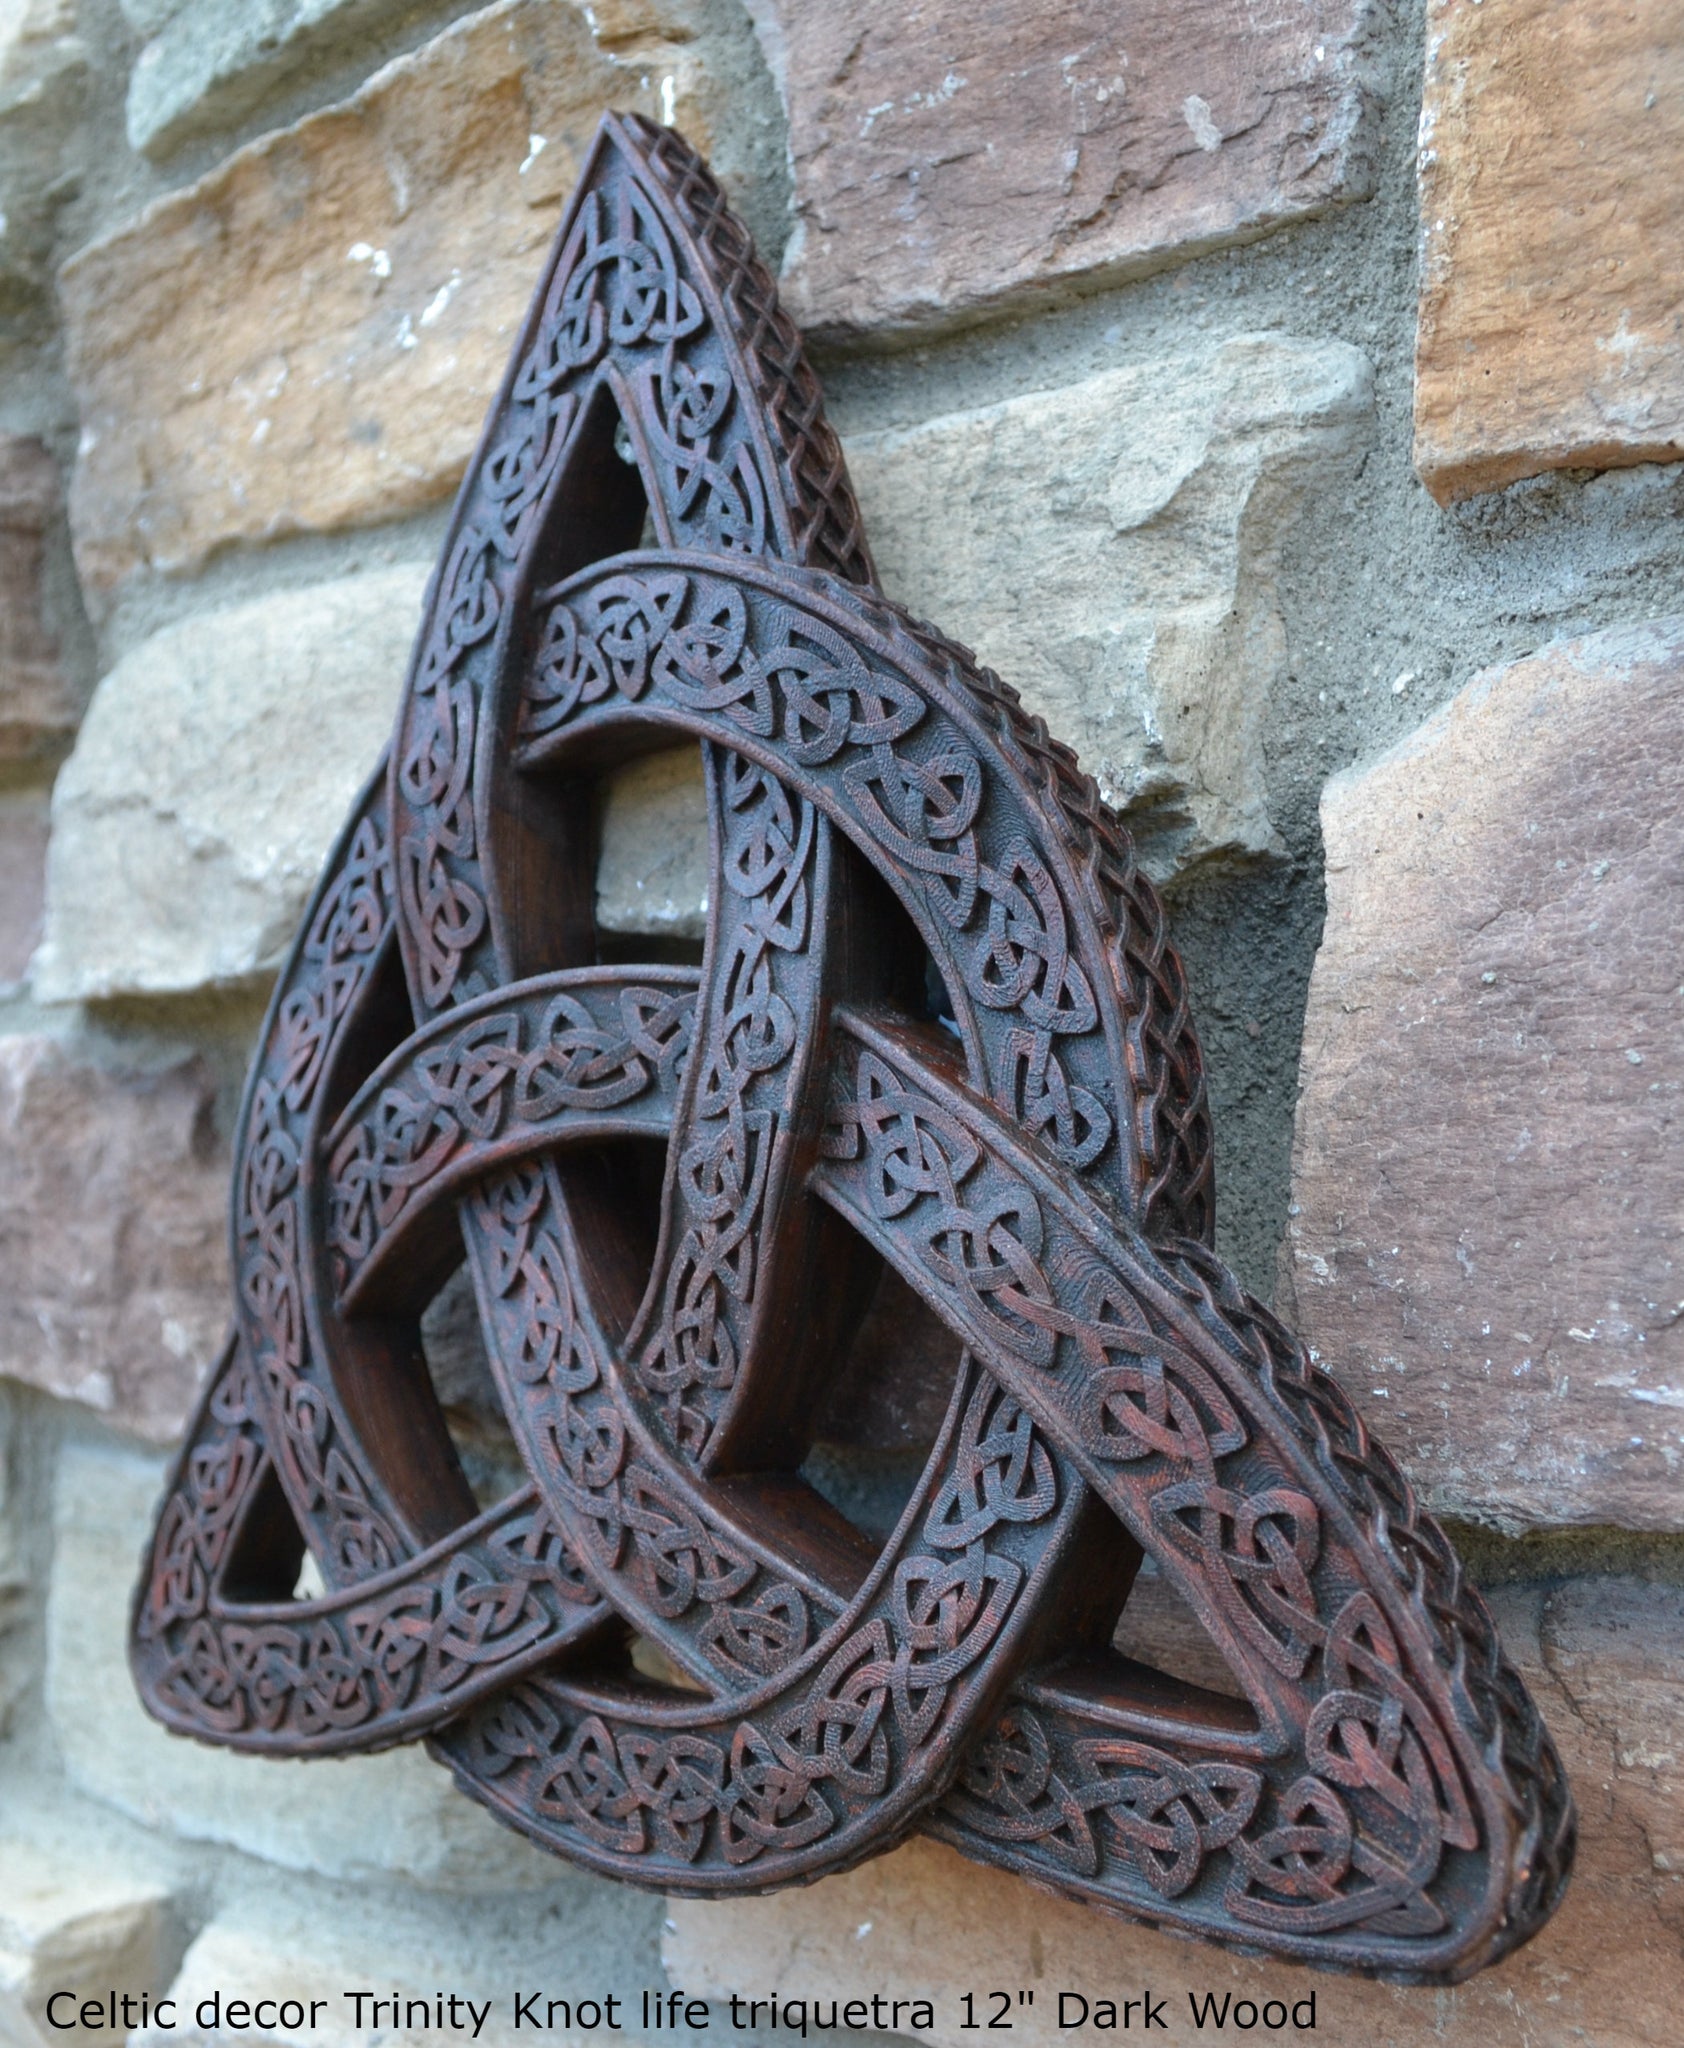 Celtic decor Trinity Knot life triquetra Wall Plaque sculpture